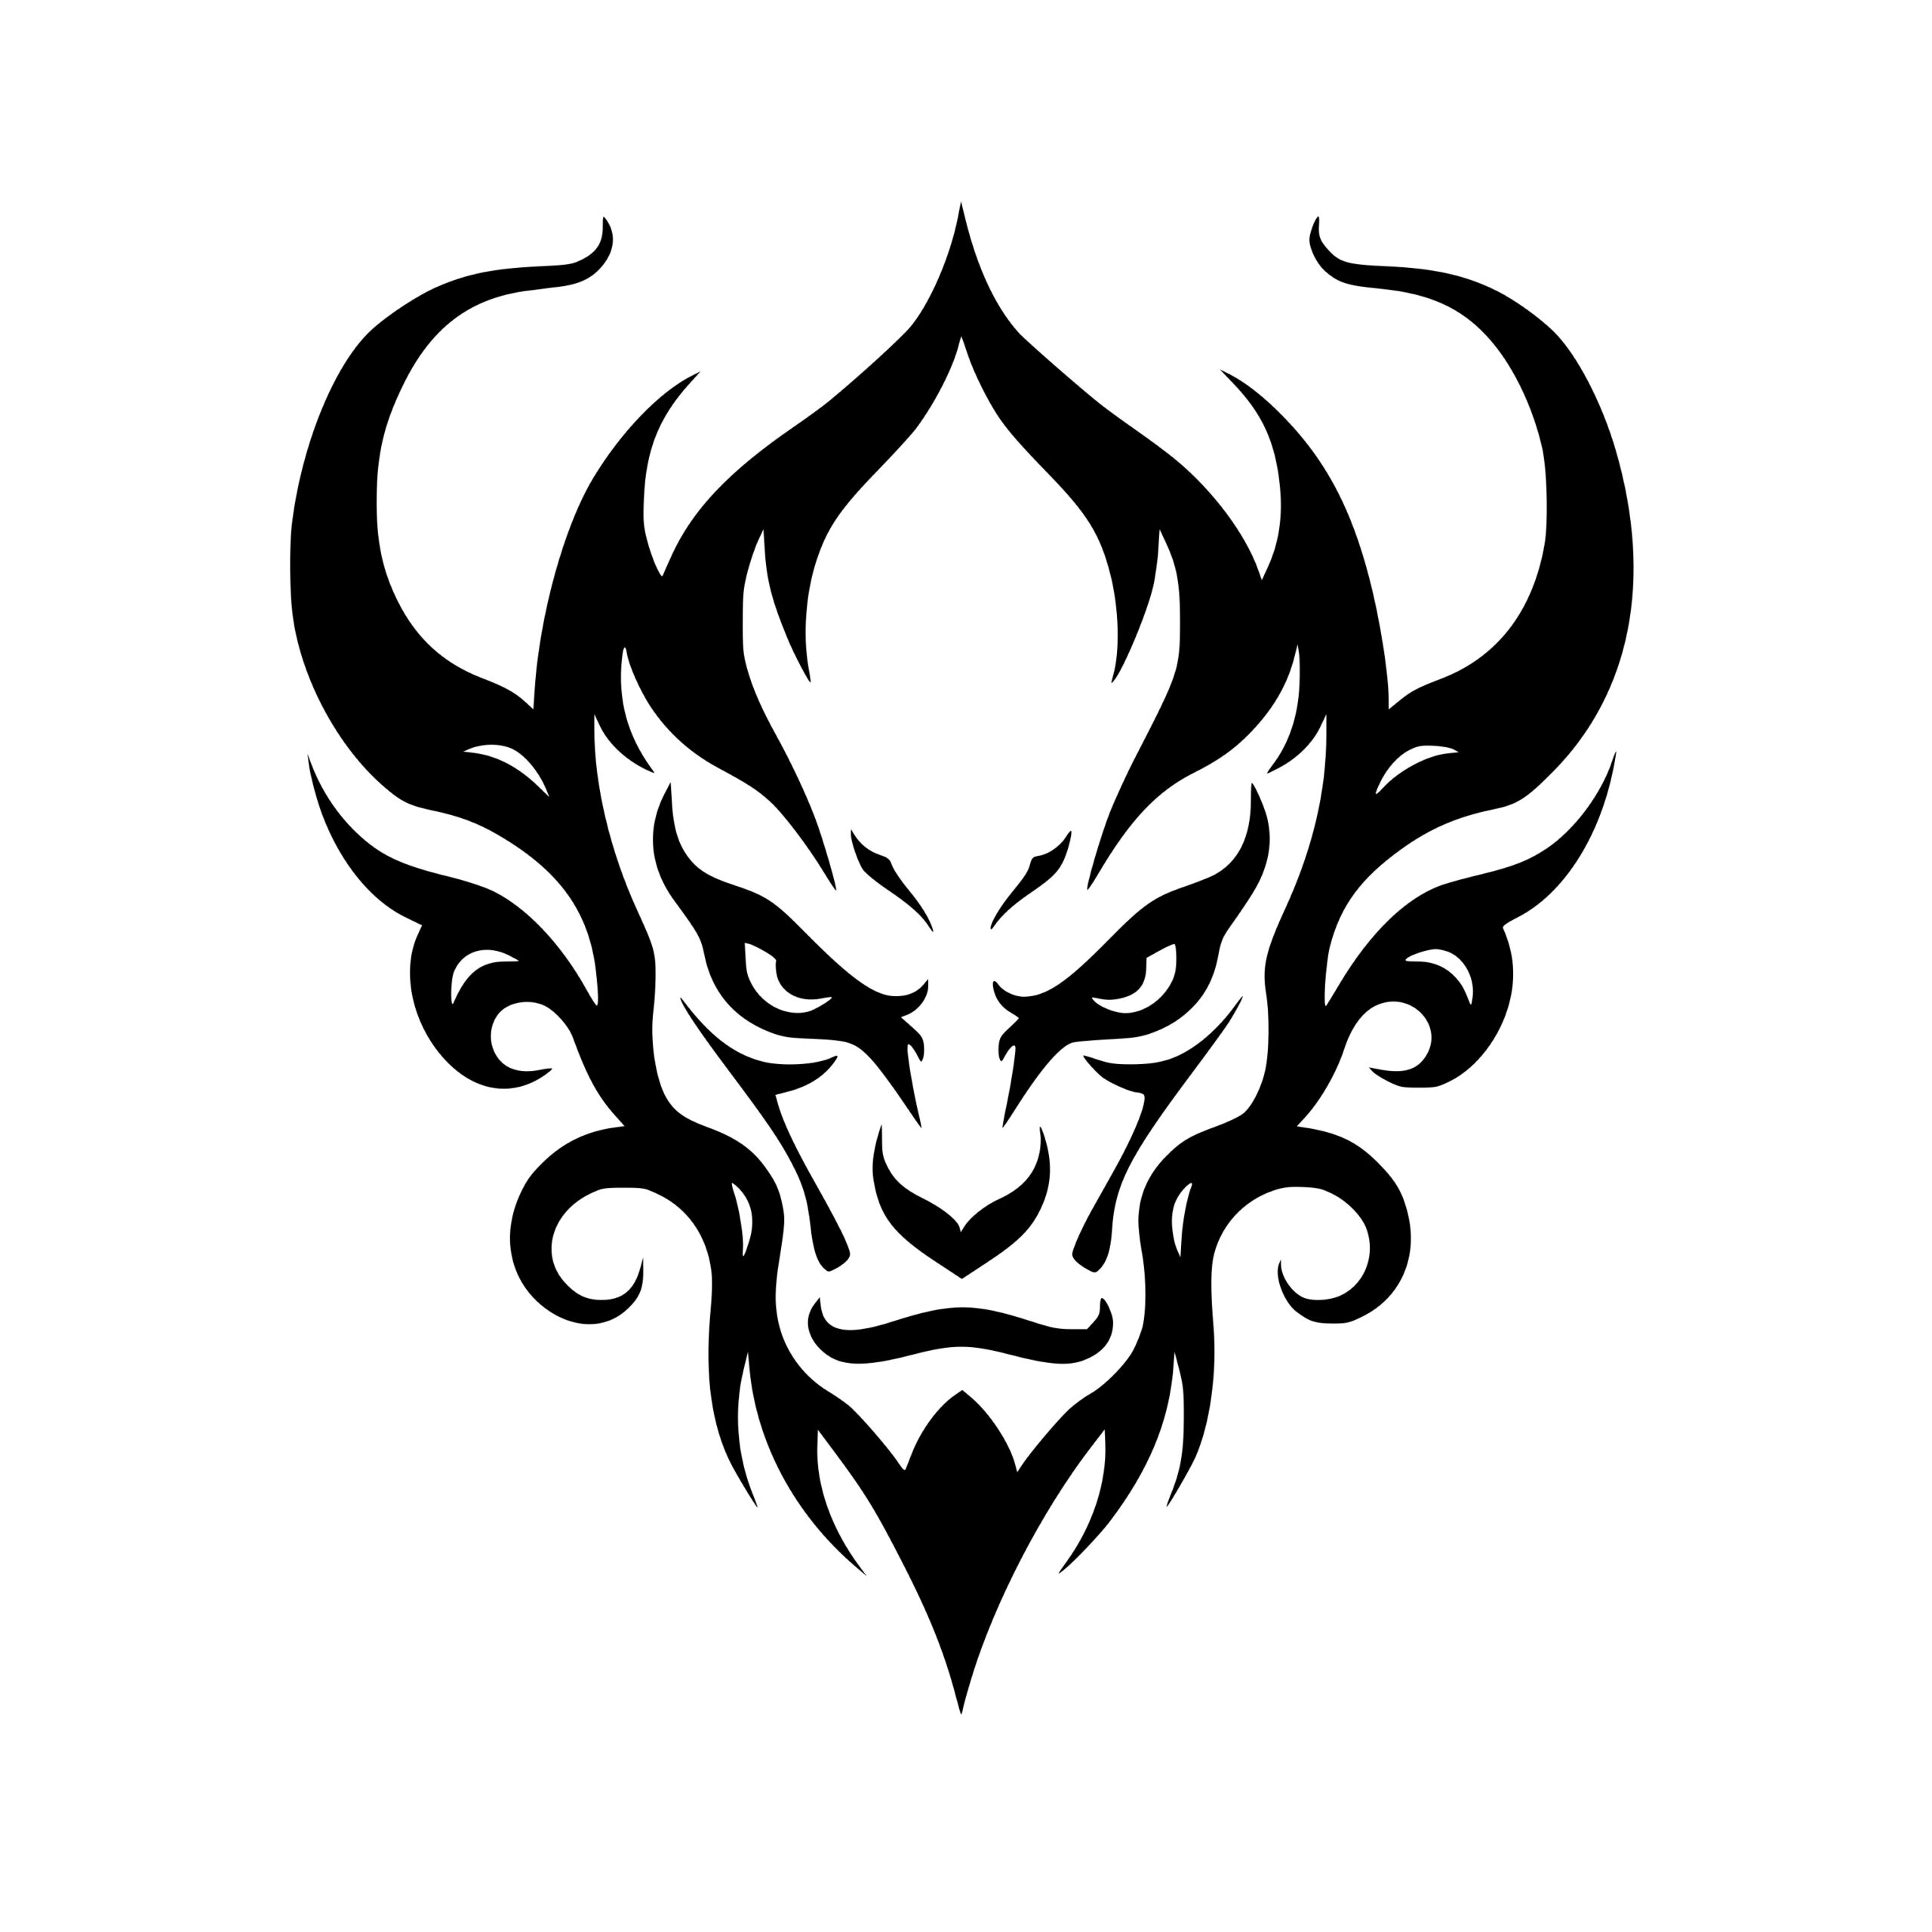 Hellish Demon SVG File for Cricut, Silhouette, Laser Machines